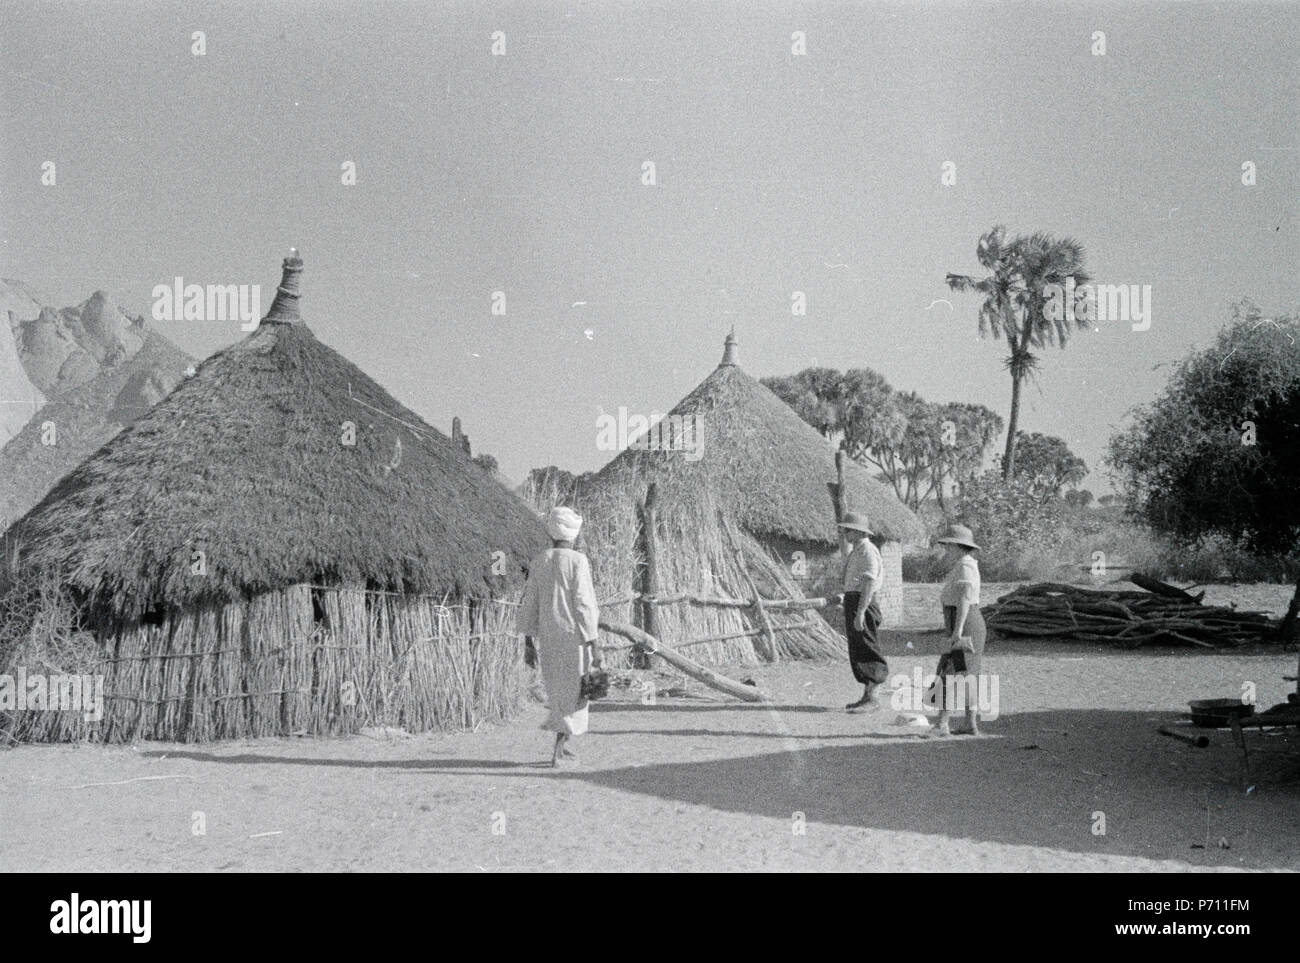 48 ETH-BIB-Besucher in Dorf im Sudan-Abessinienflug 1934-LBS MH02-22-0934 Stock Photo